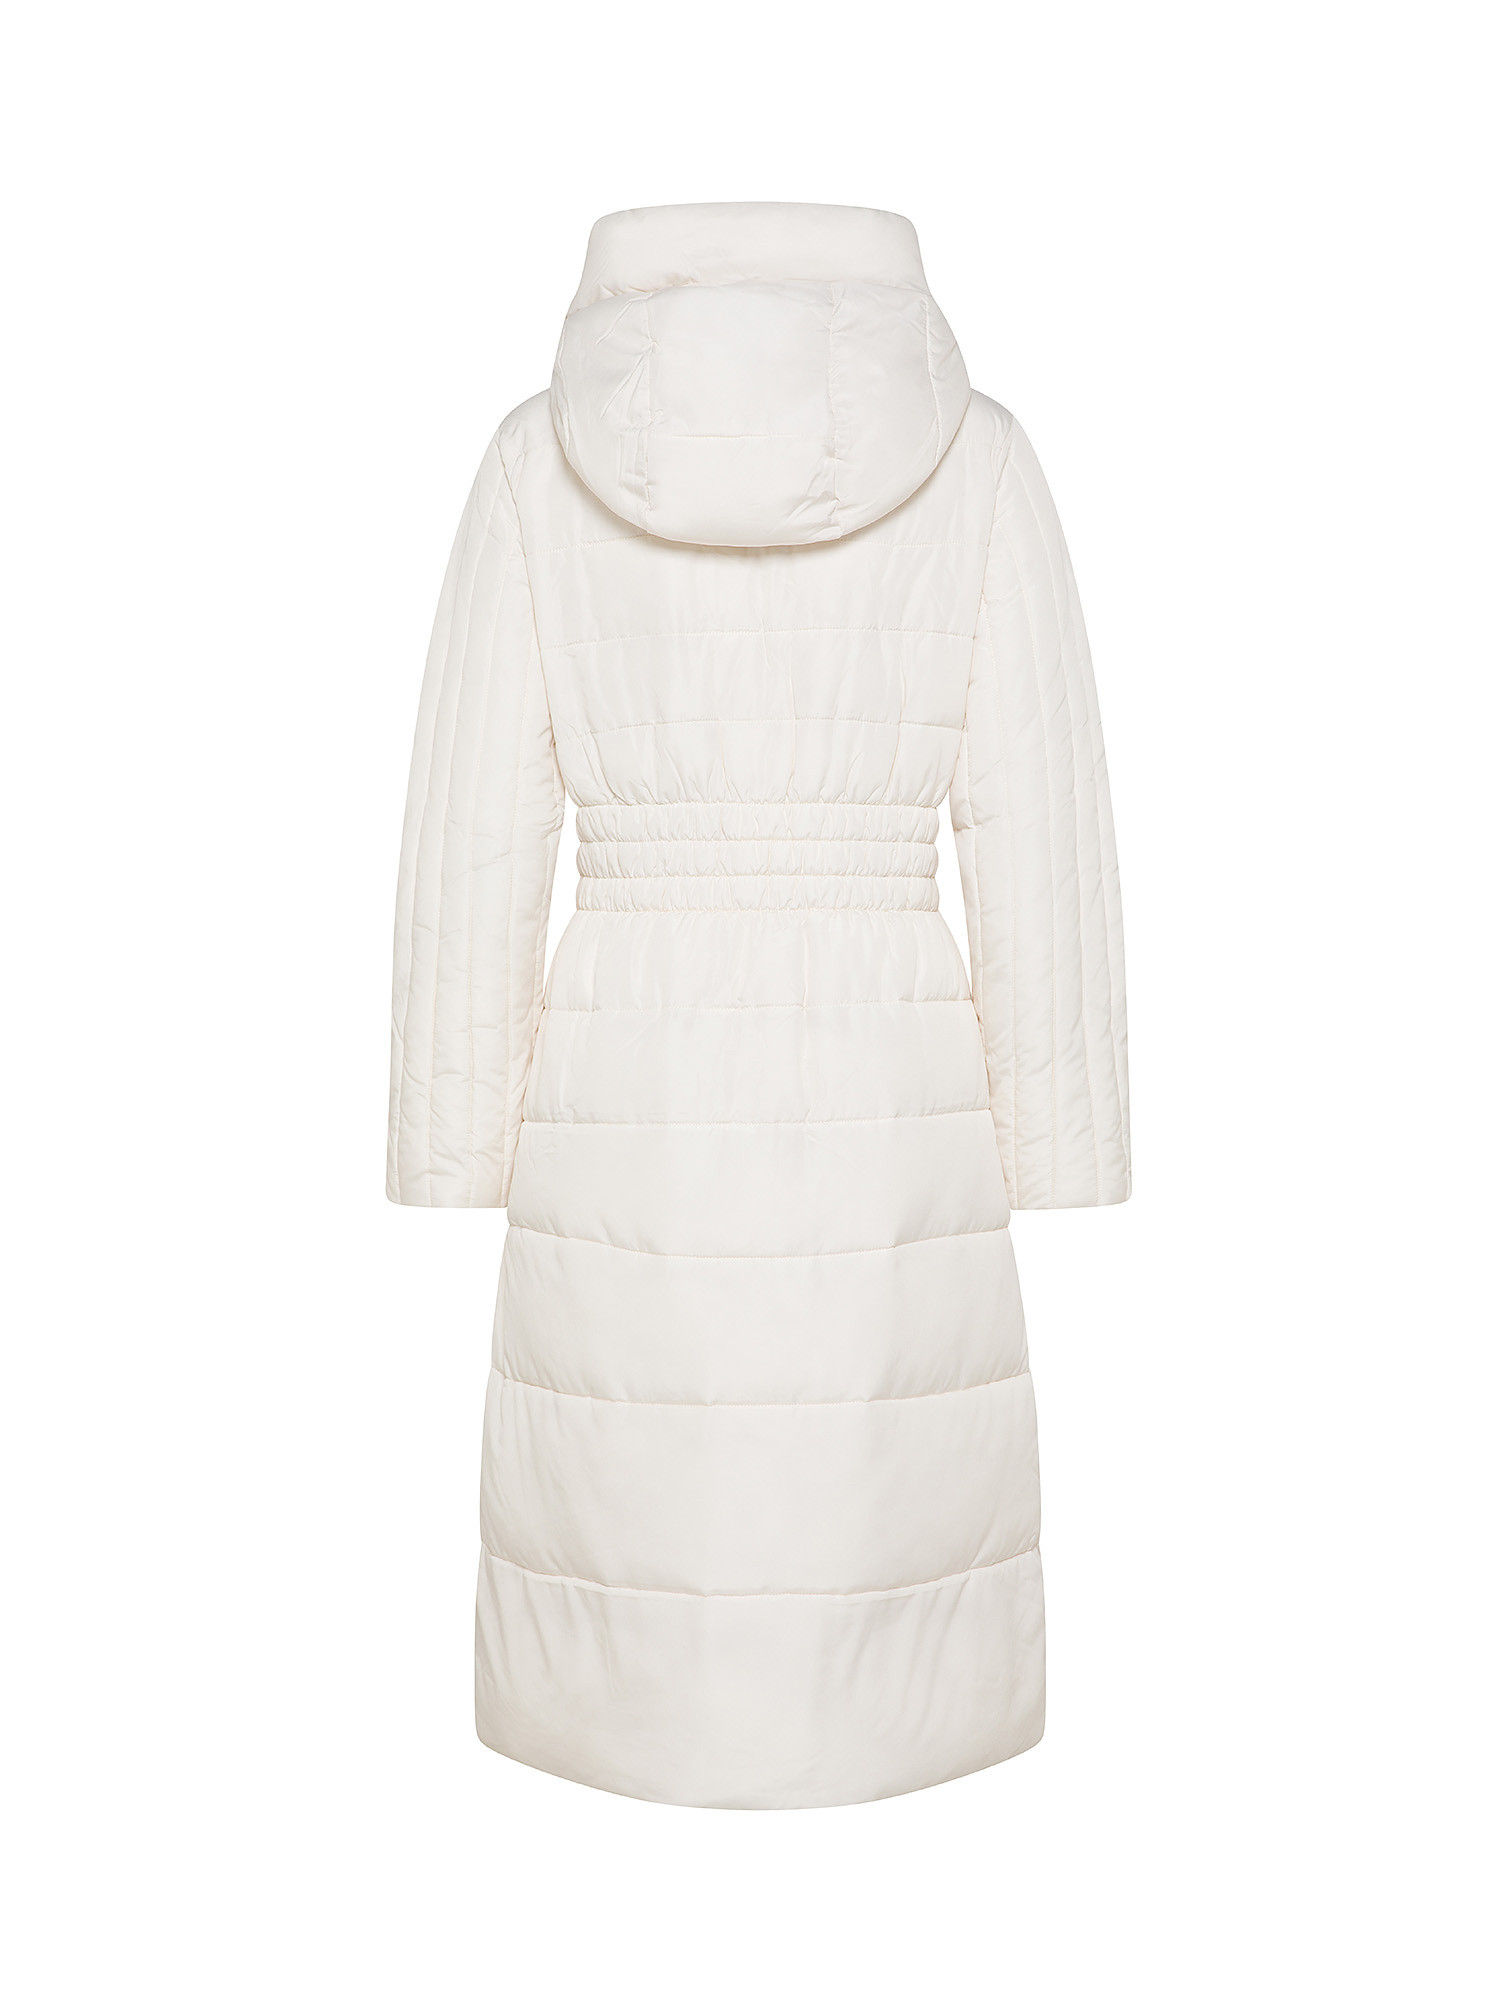 Armani Exchange - Padded down jacket with hood, White, large image number 1